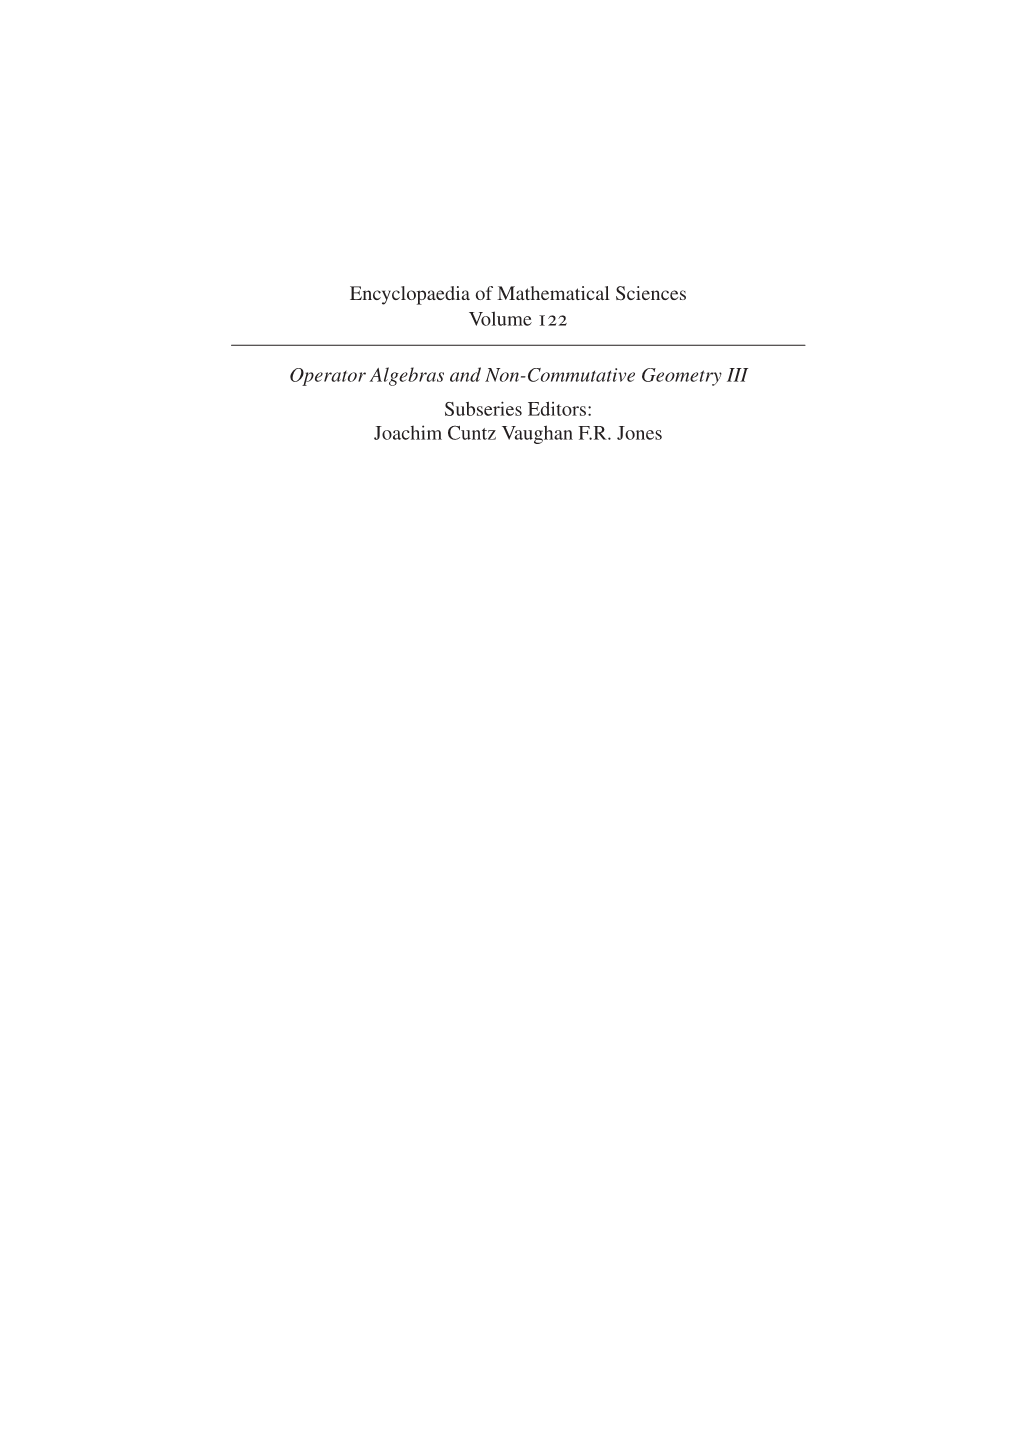 Encyclopaedia of Mathematical Sciences Volume 122 Operator